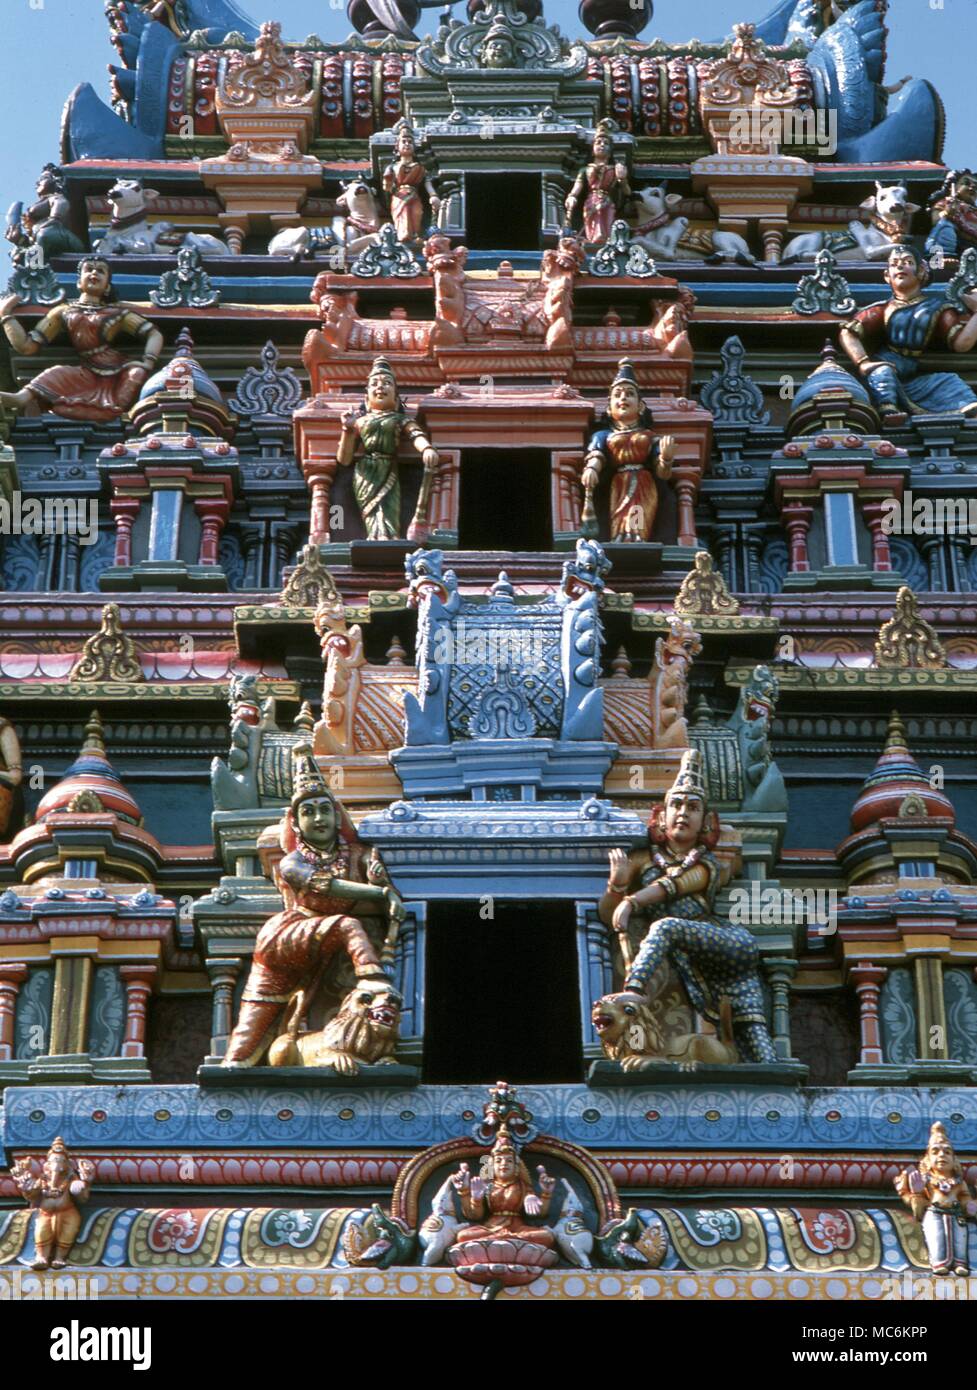 Hindu Mythology. The upper tiers of a Hindu Temple in Kandy, Sri Lanka. Stock Photo